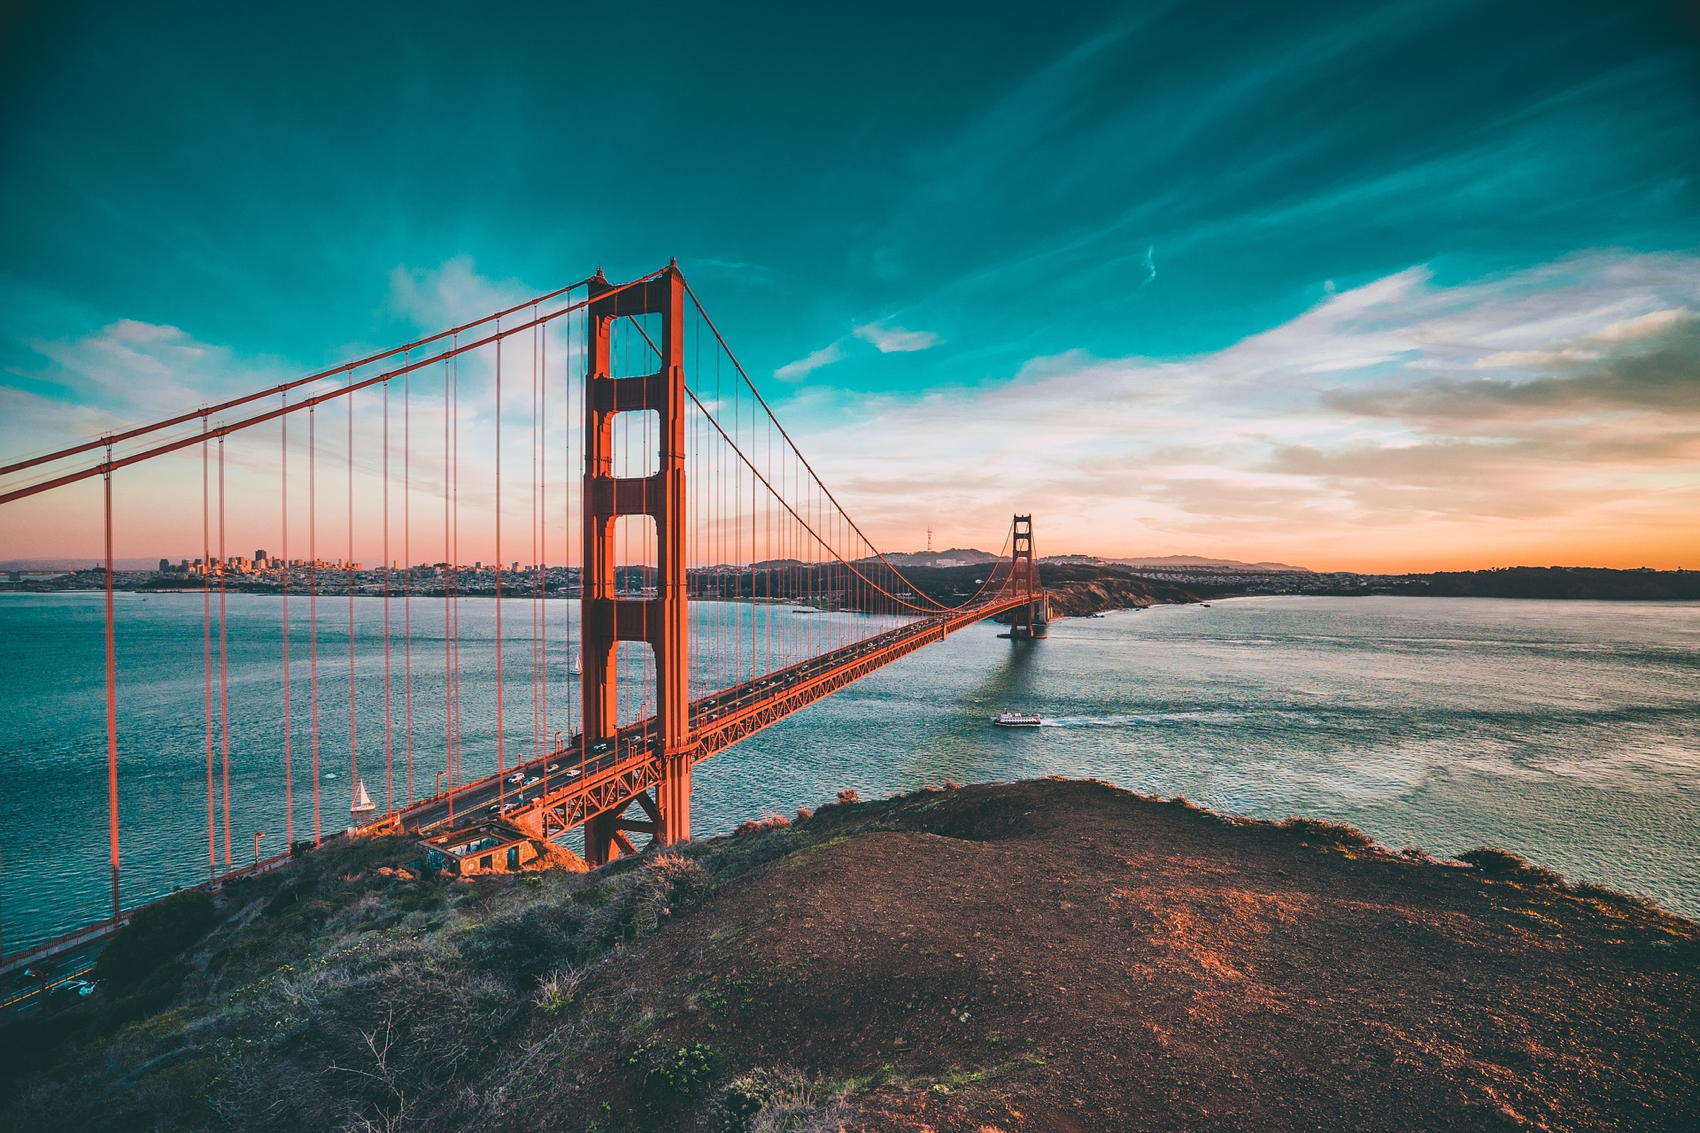 Golden Gate Bridge - Image by Free-Photos